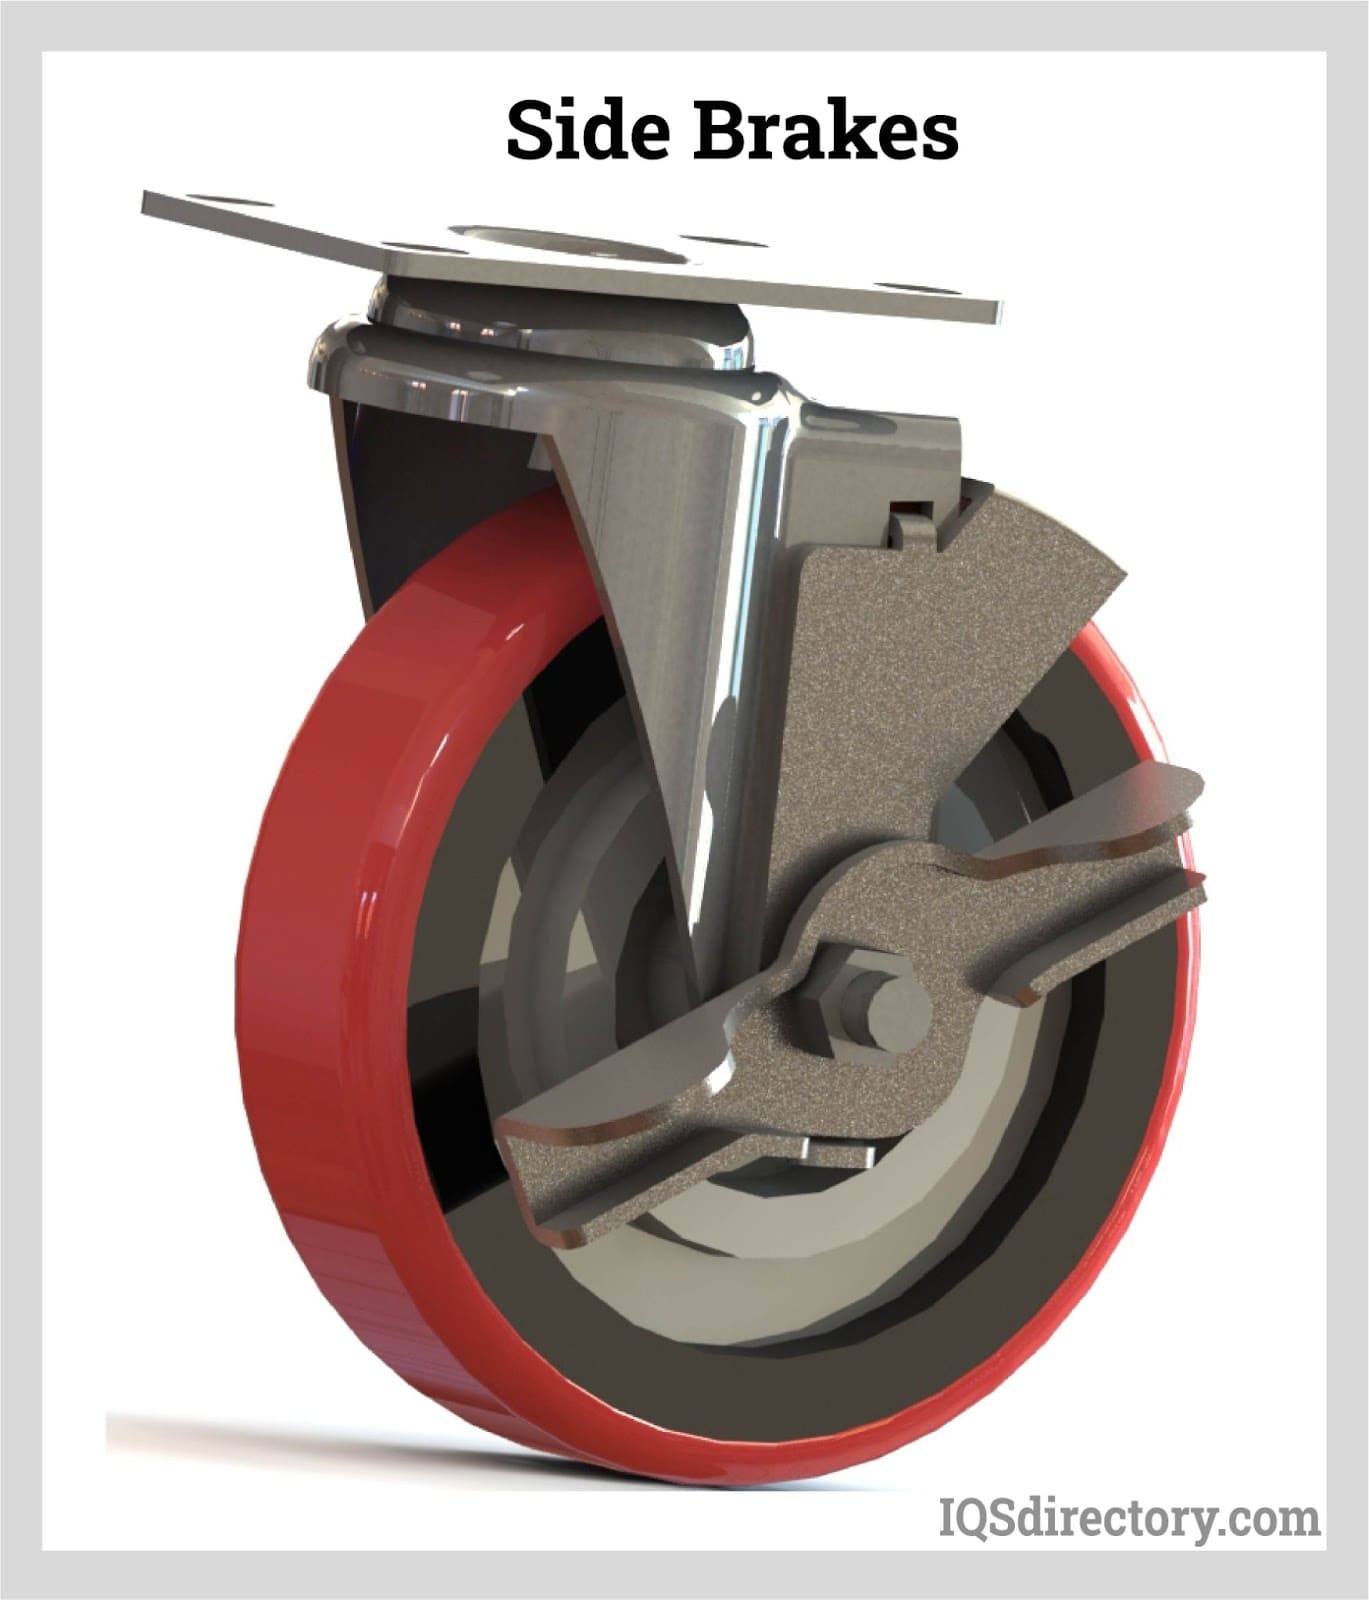 Side Brakes